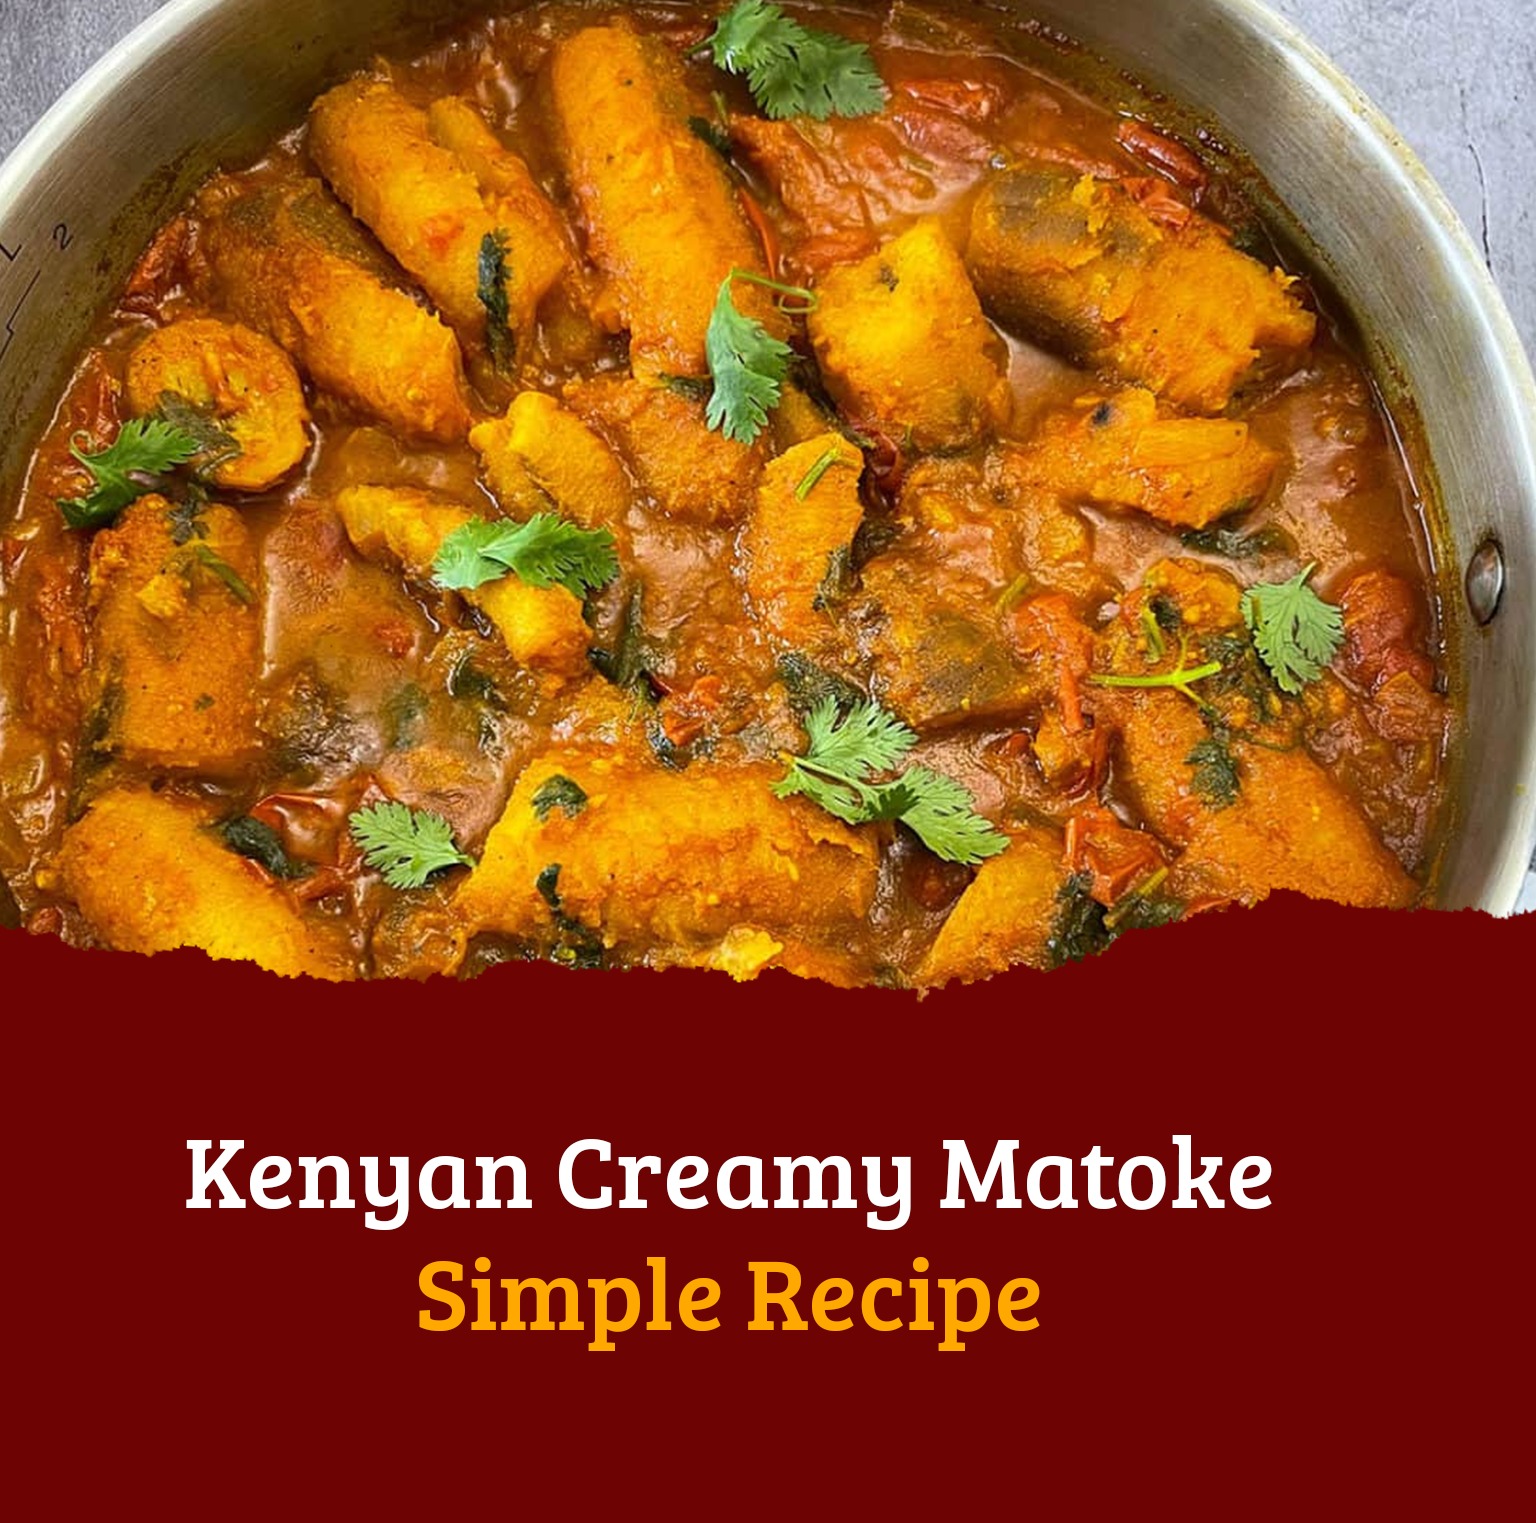 Kenyan Creamy Matoke